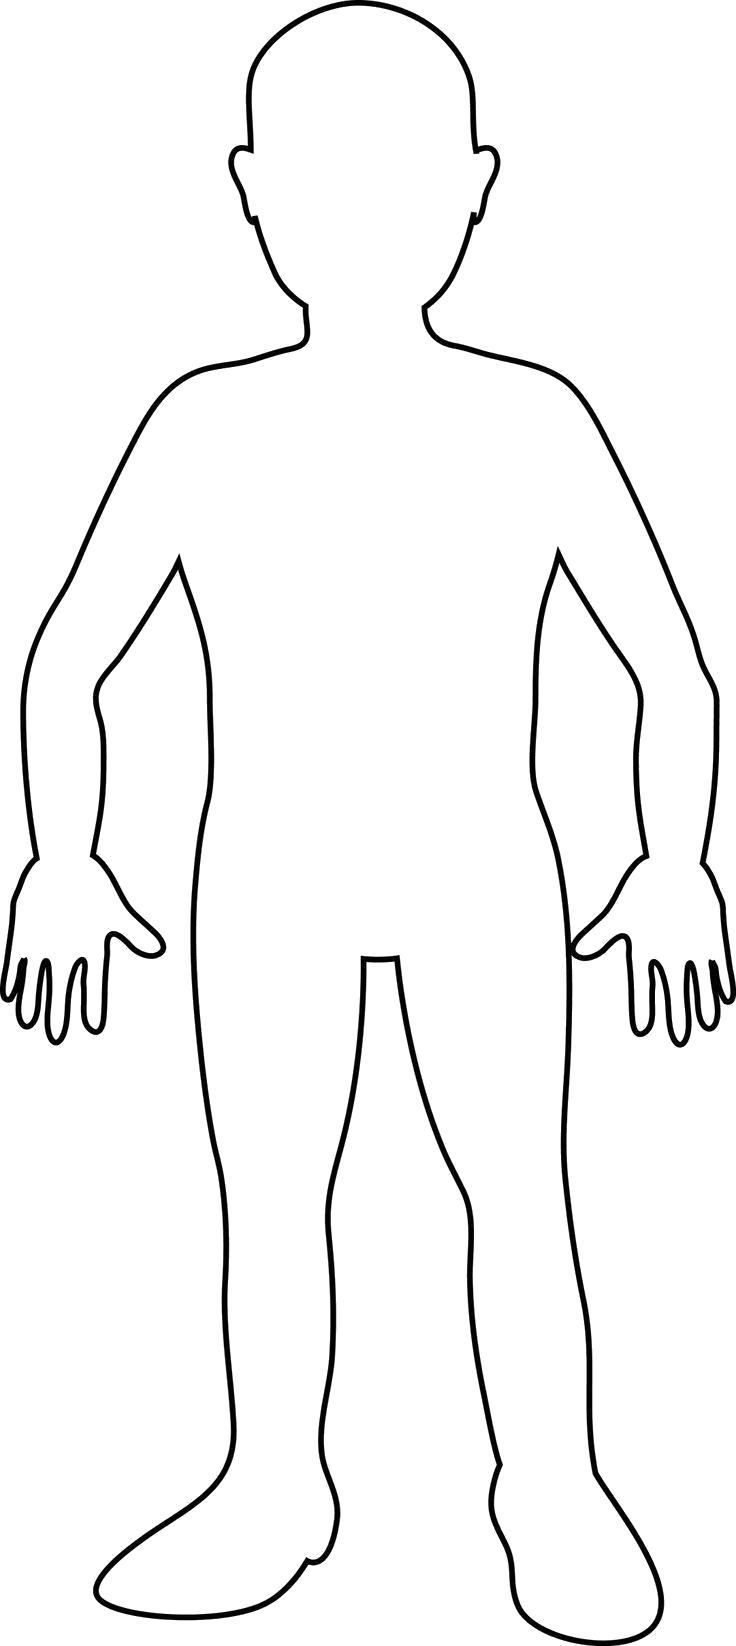 Раскраска Раскраски шаблон человека шаблон человека для вырезания из бумаги. Шаблон